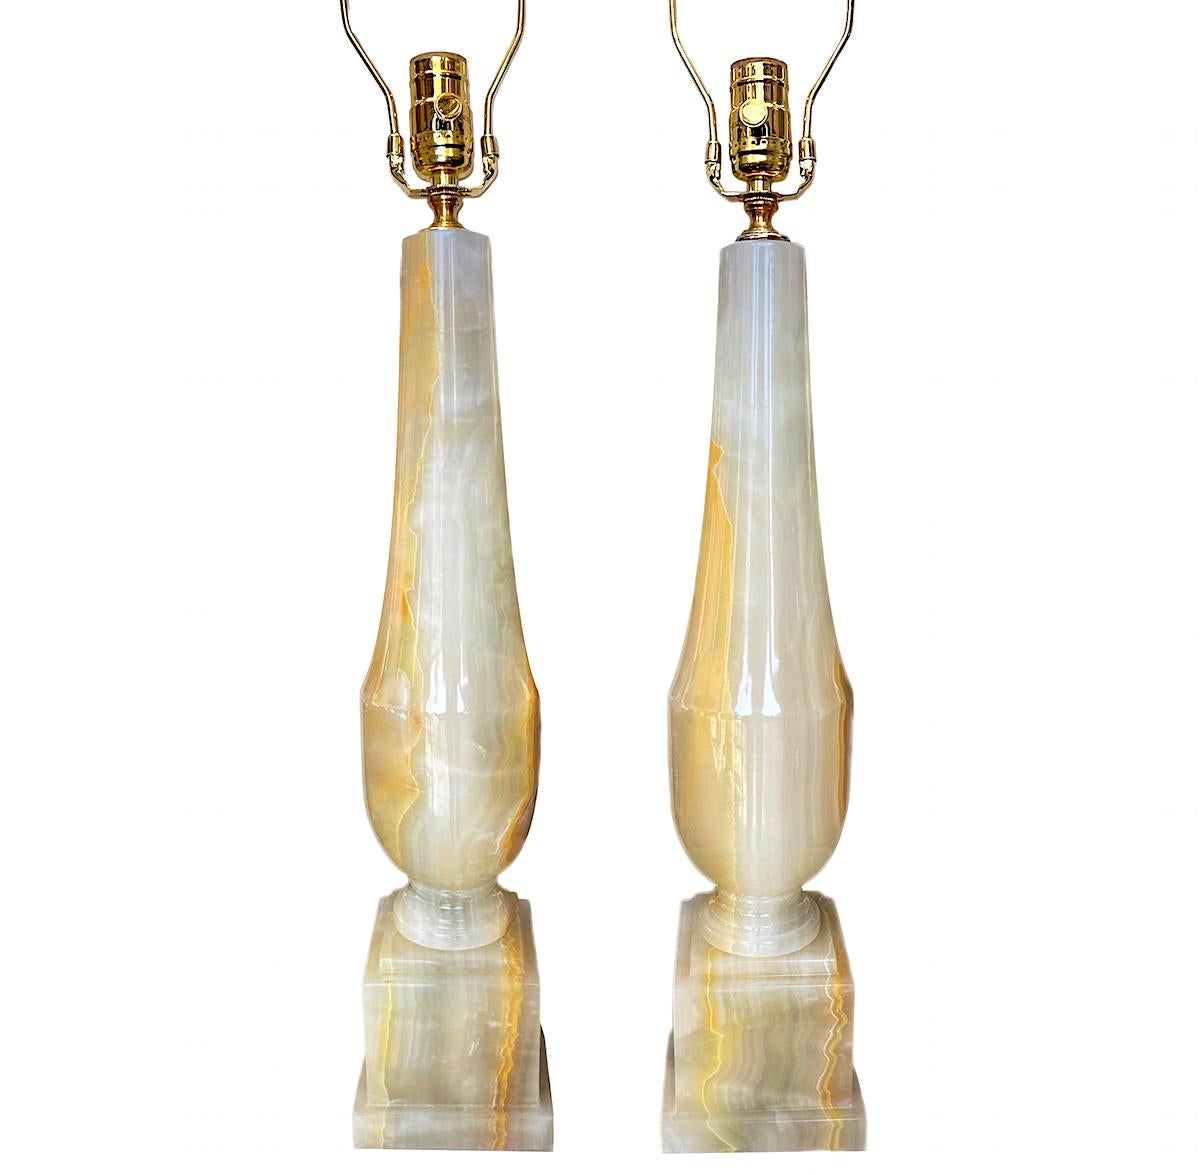 Pair of circa 1920s Italian onyx column lamps.

Measurements:
Height of body: 19